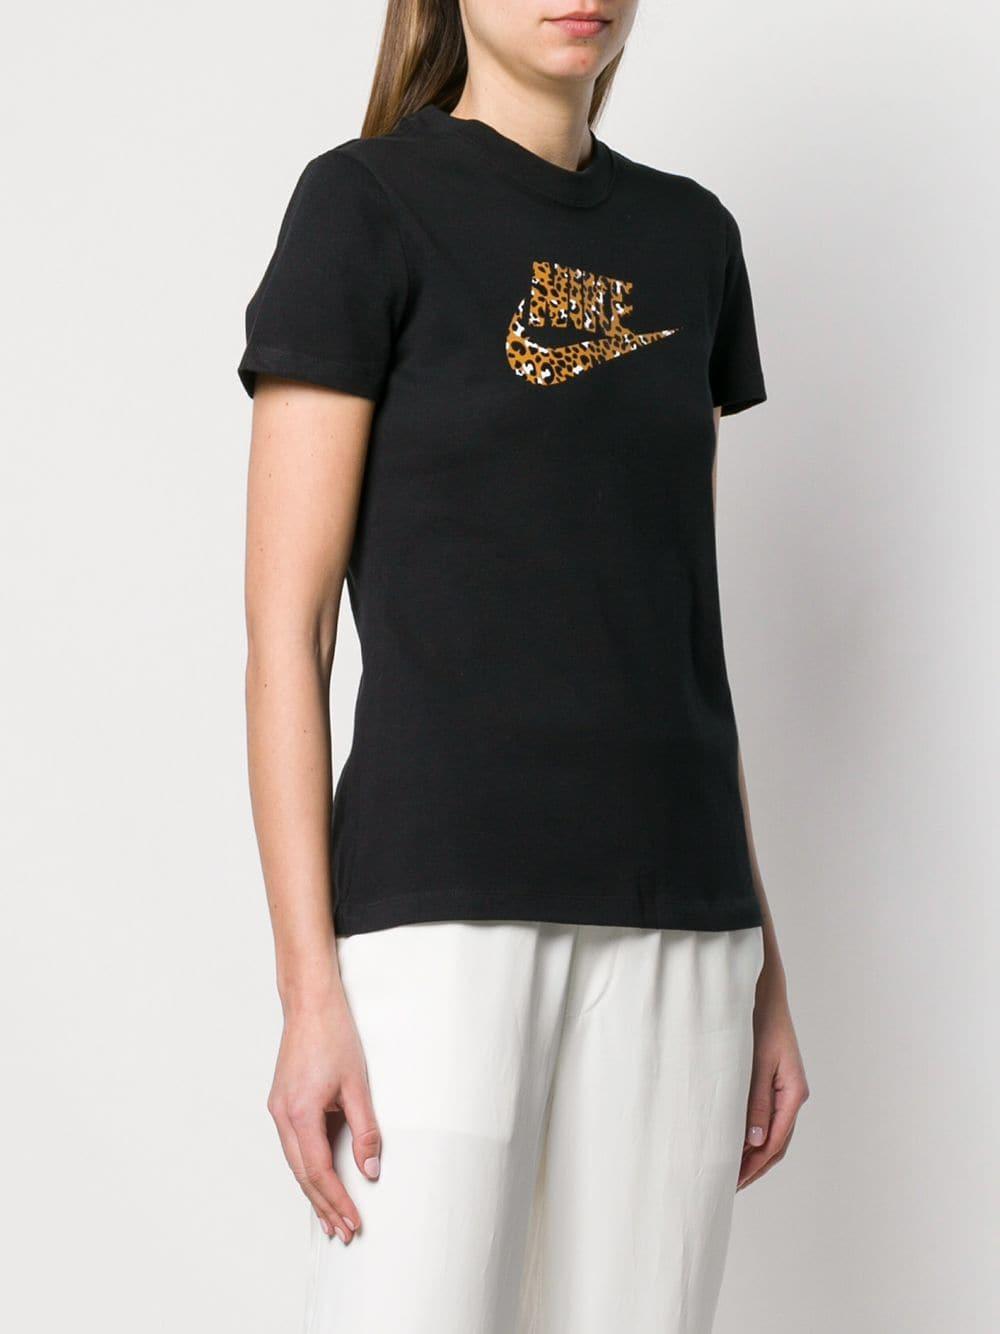 Nike Cotton Leopard Print Logo T-shirt in Black - Lyst